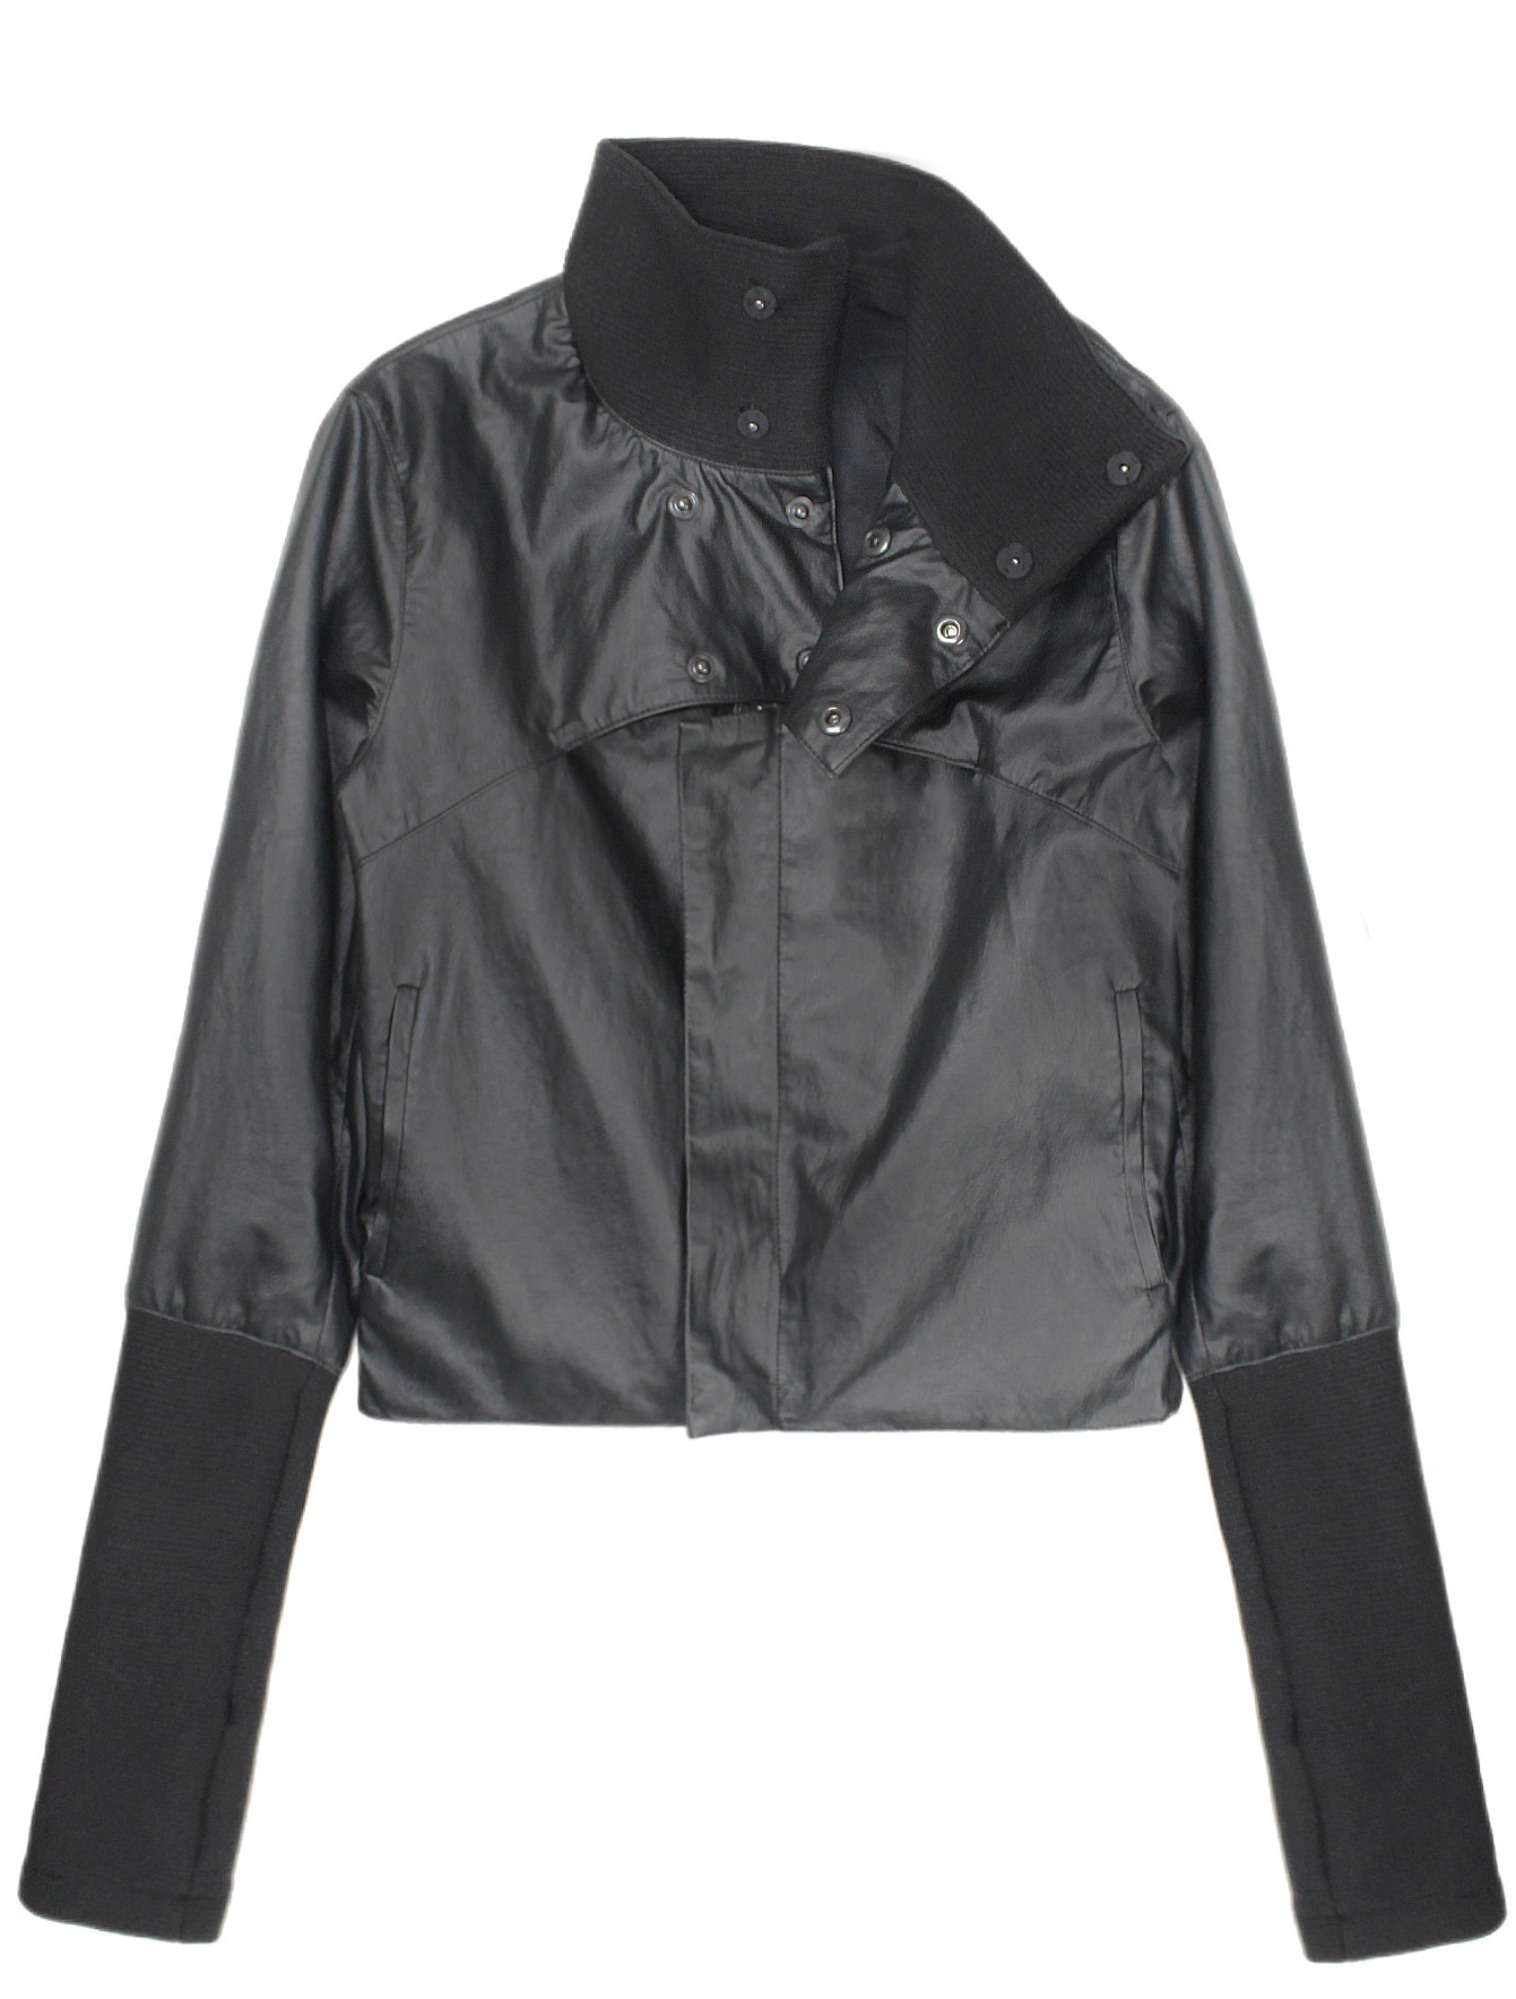 Crack leather jacket (Black)